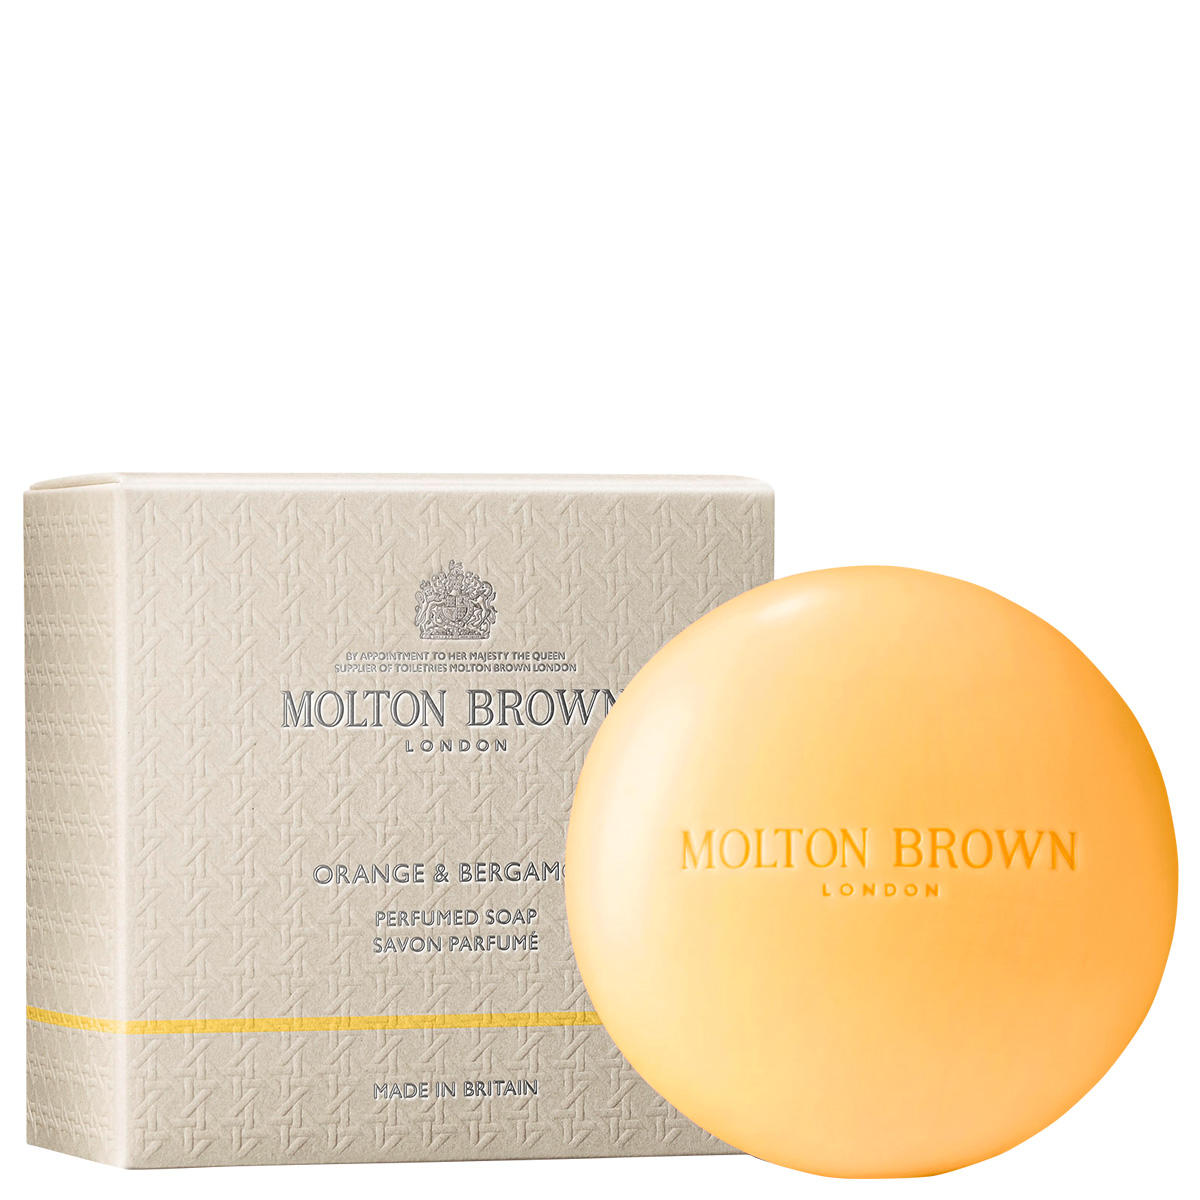 MOLTON BROWN Orange & Bergamot Perfumed Soap 150 g - 3